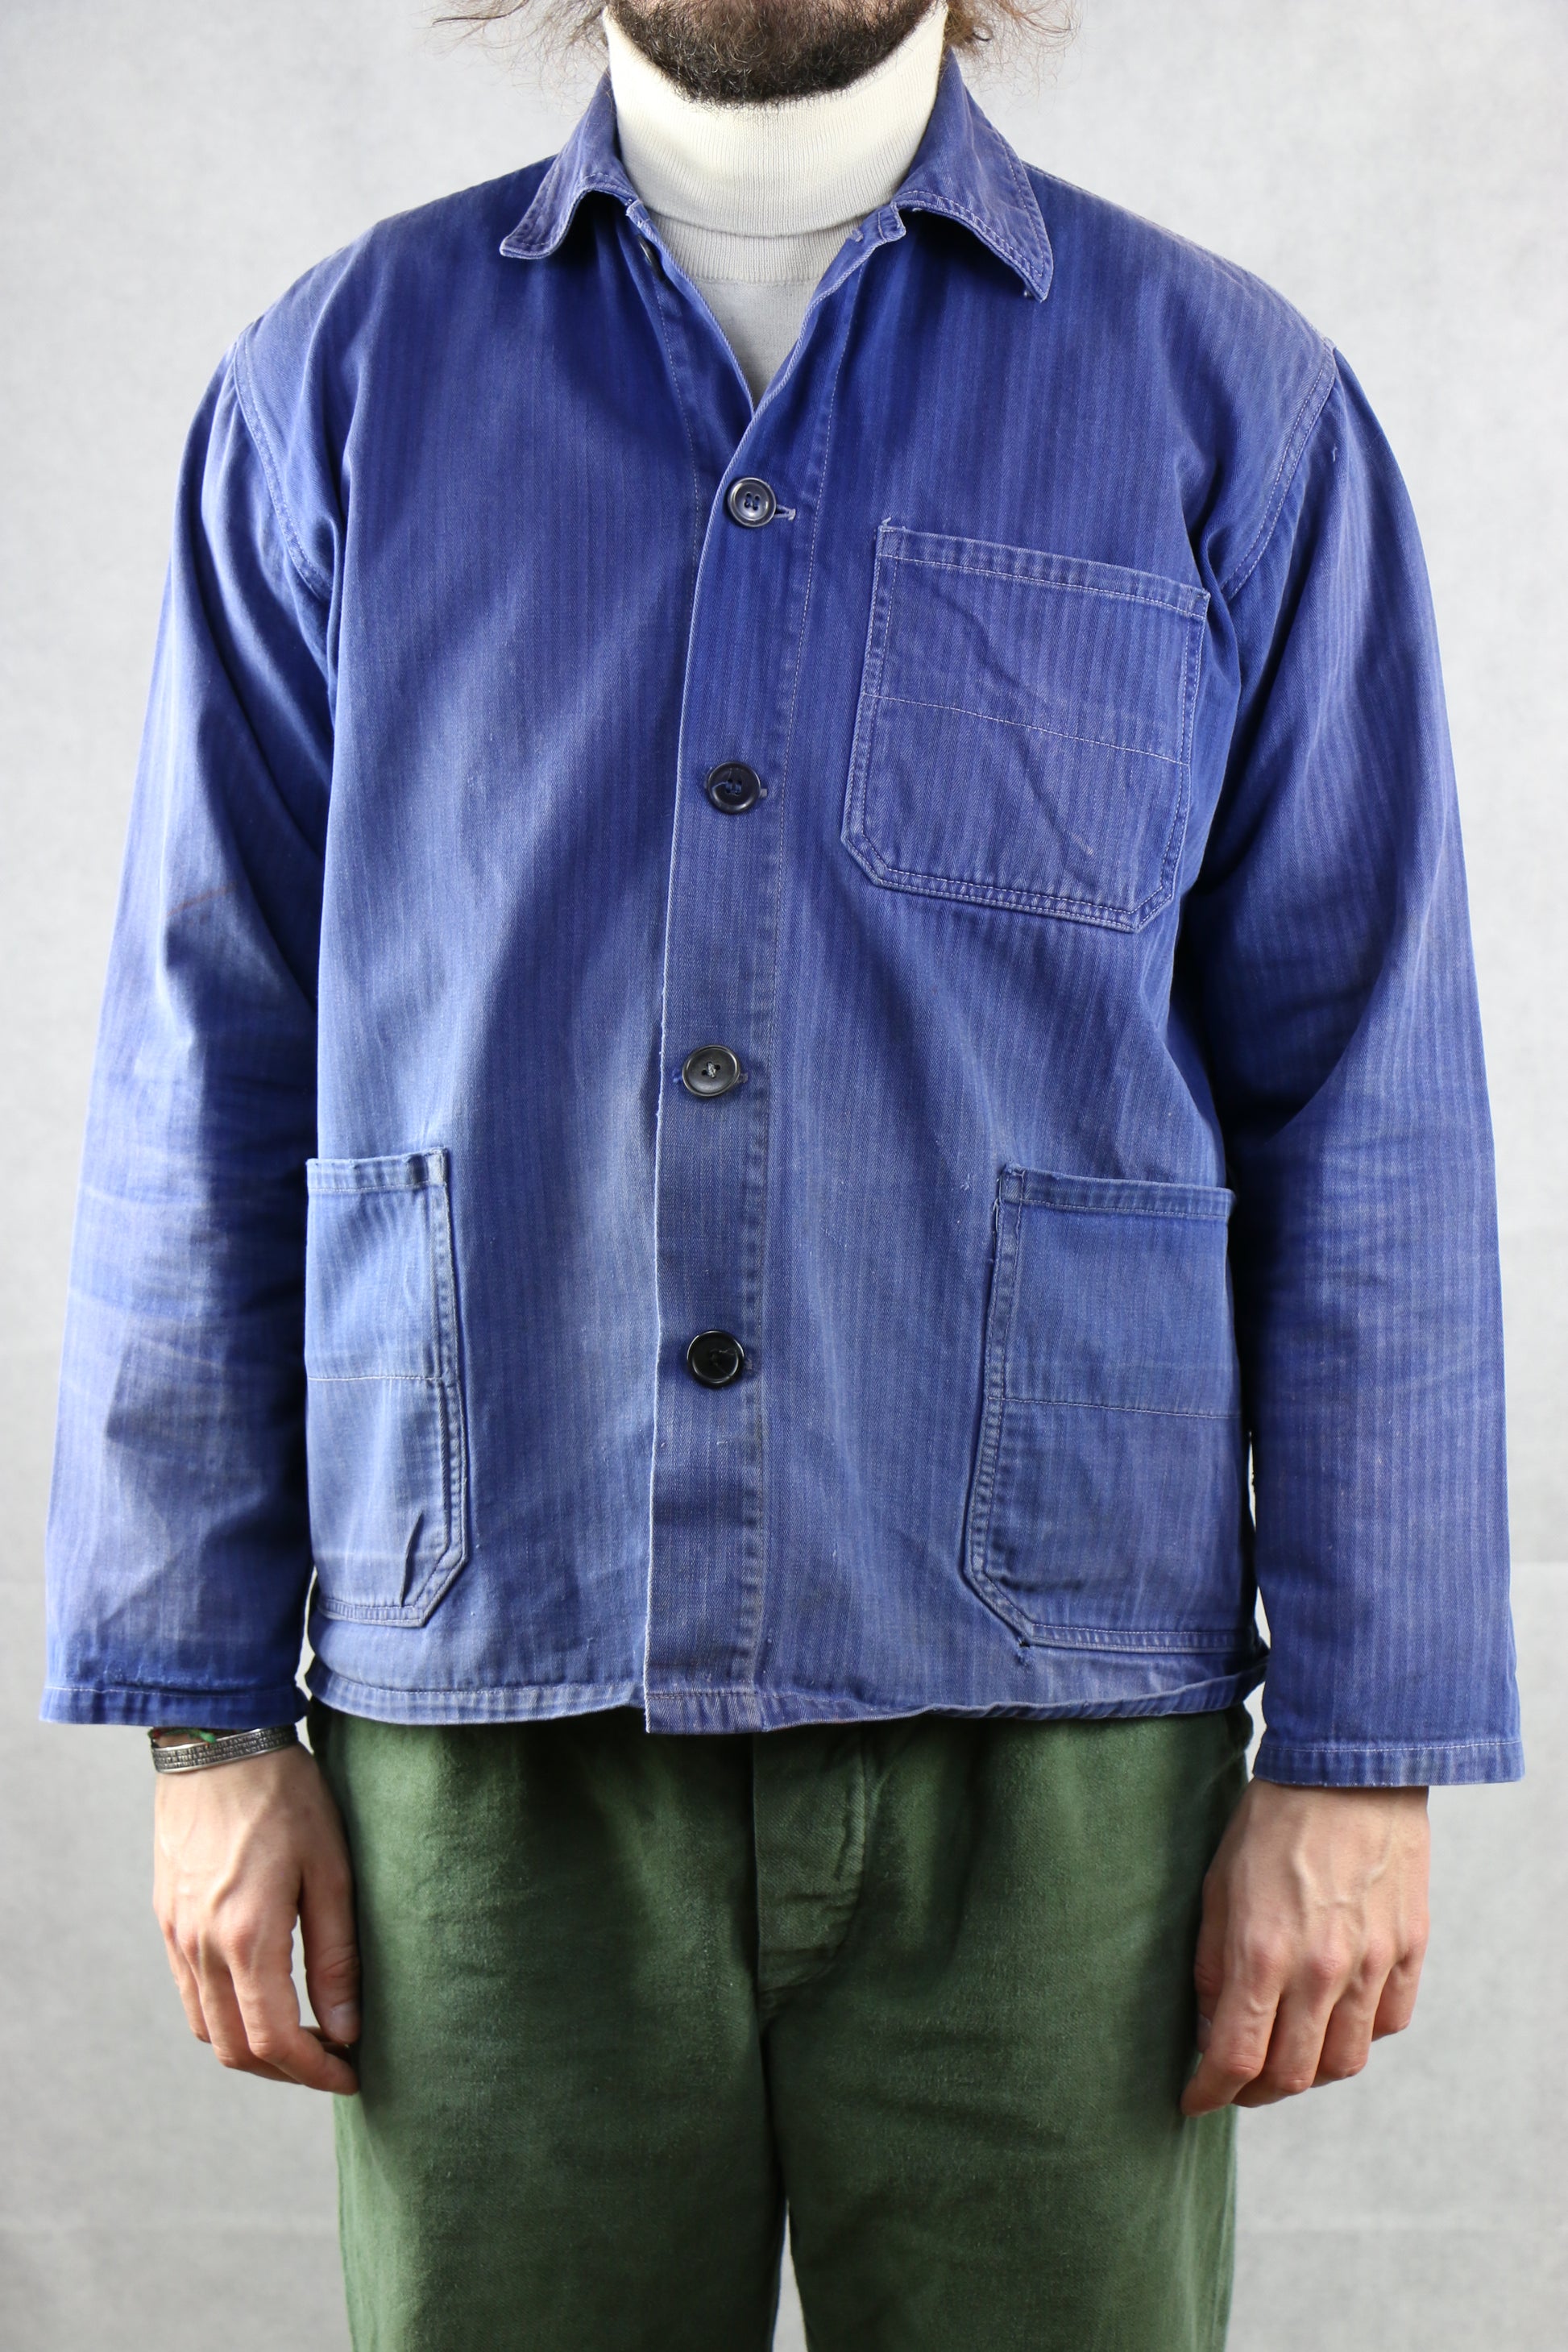 Work Jacket Faded XL/56 - vintage clothing clochard92.com